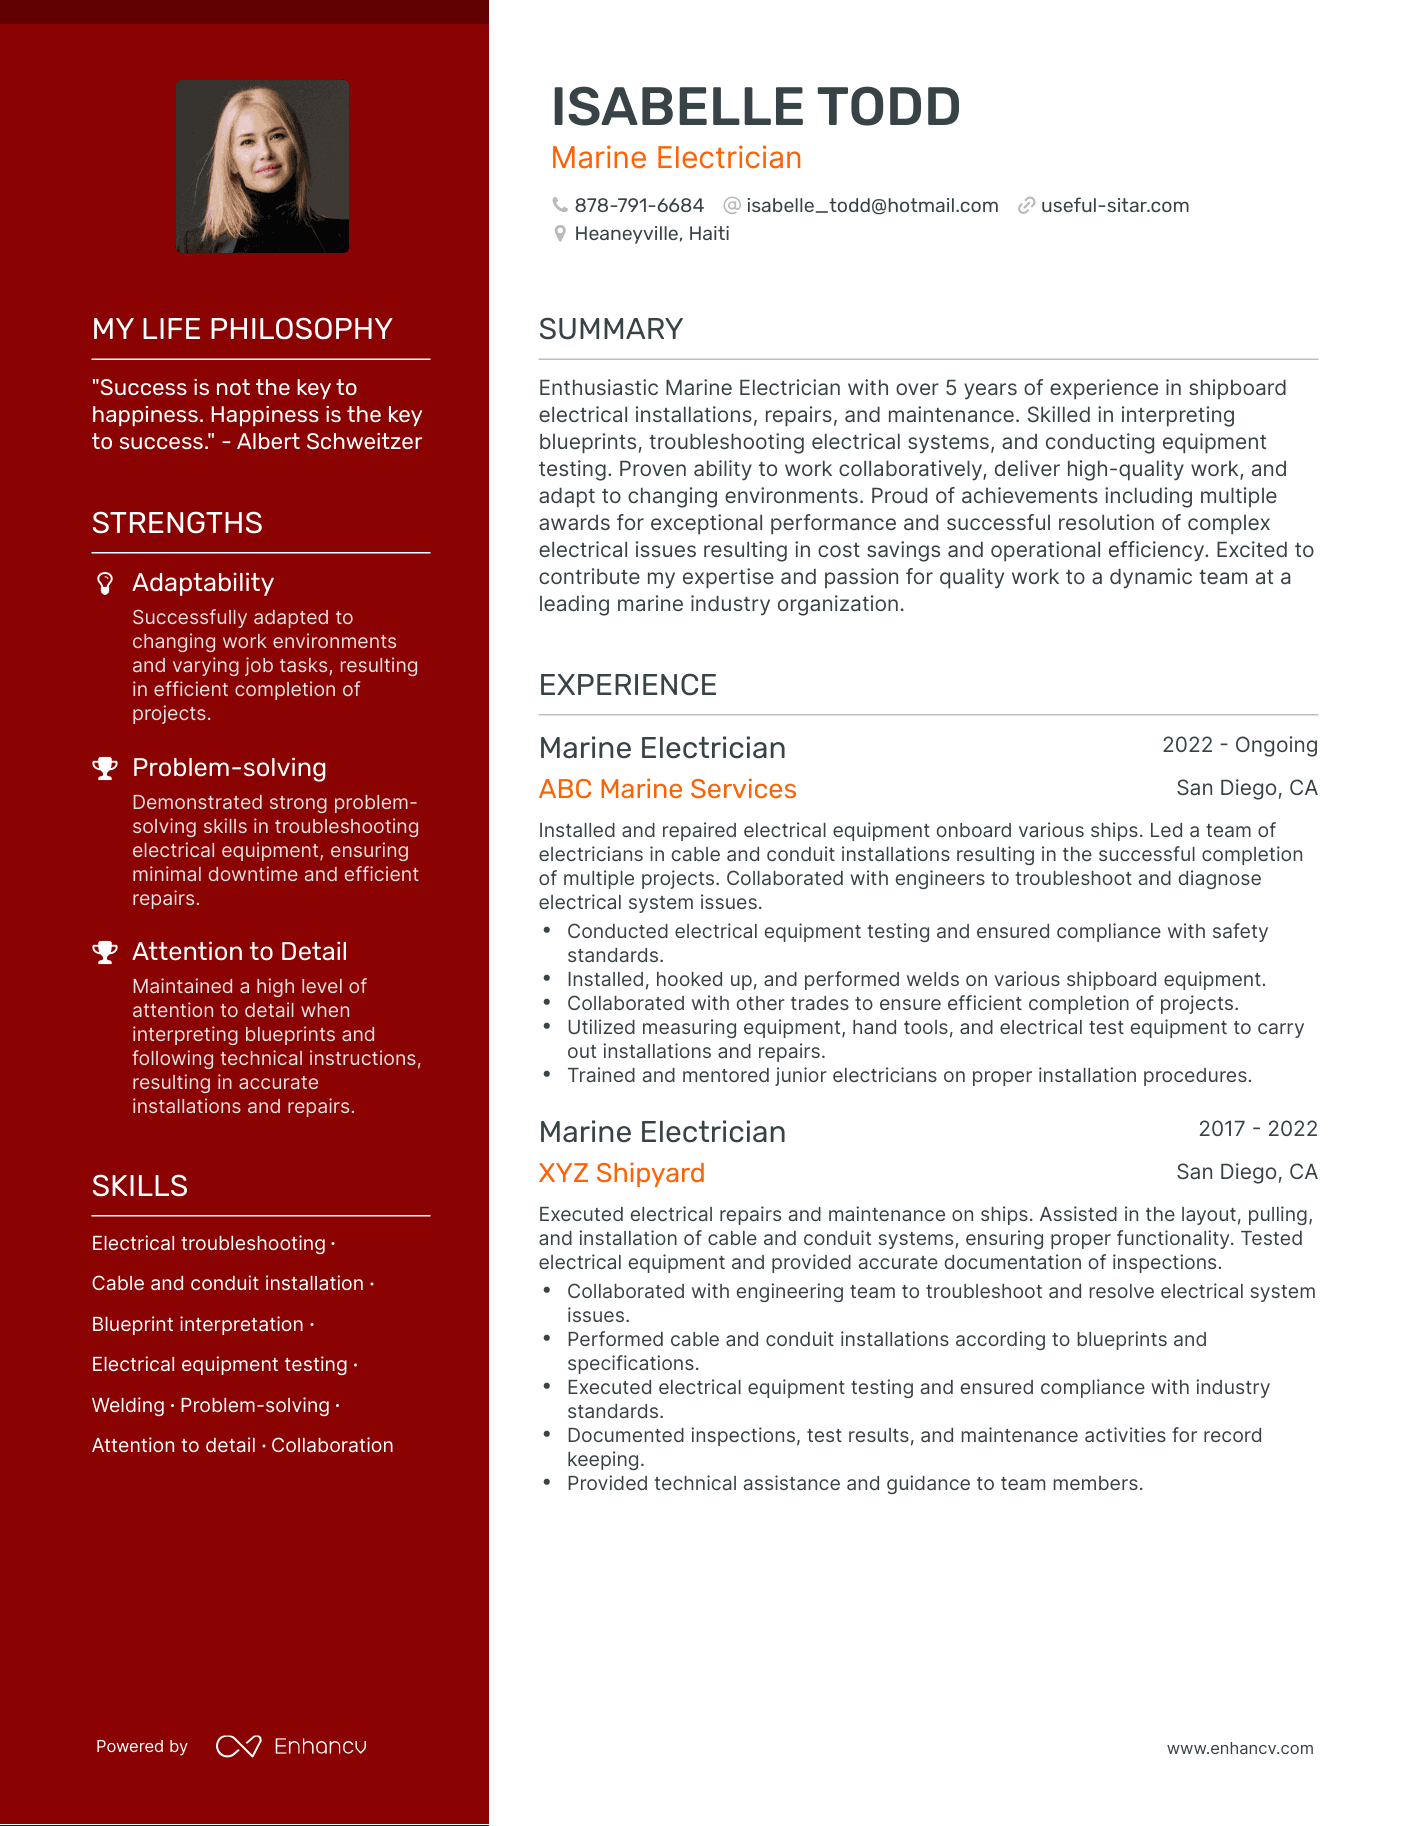 Marine Electrician resume example